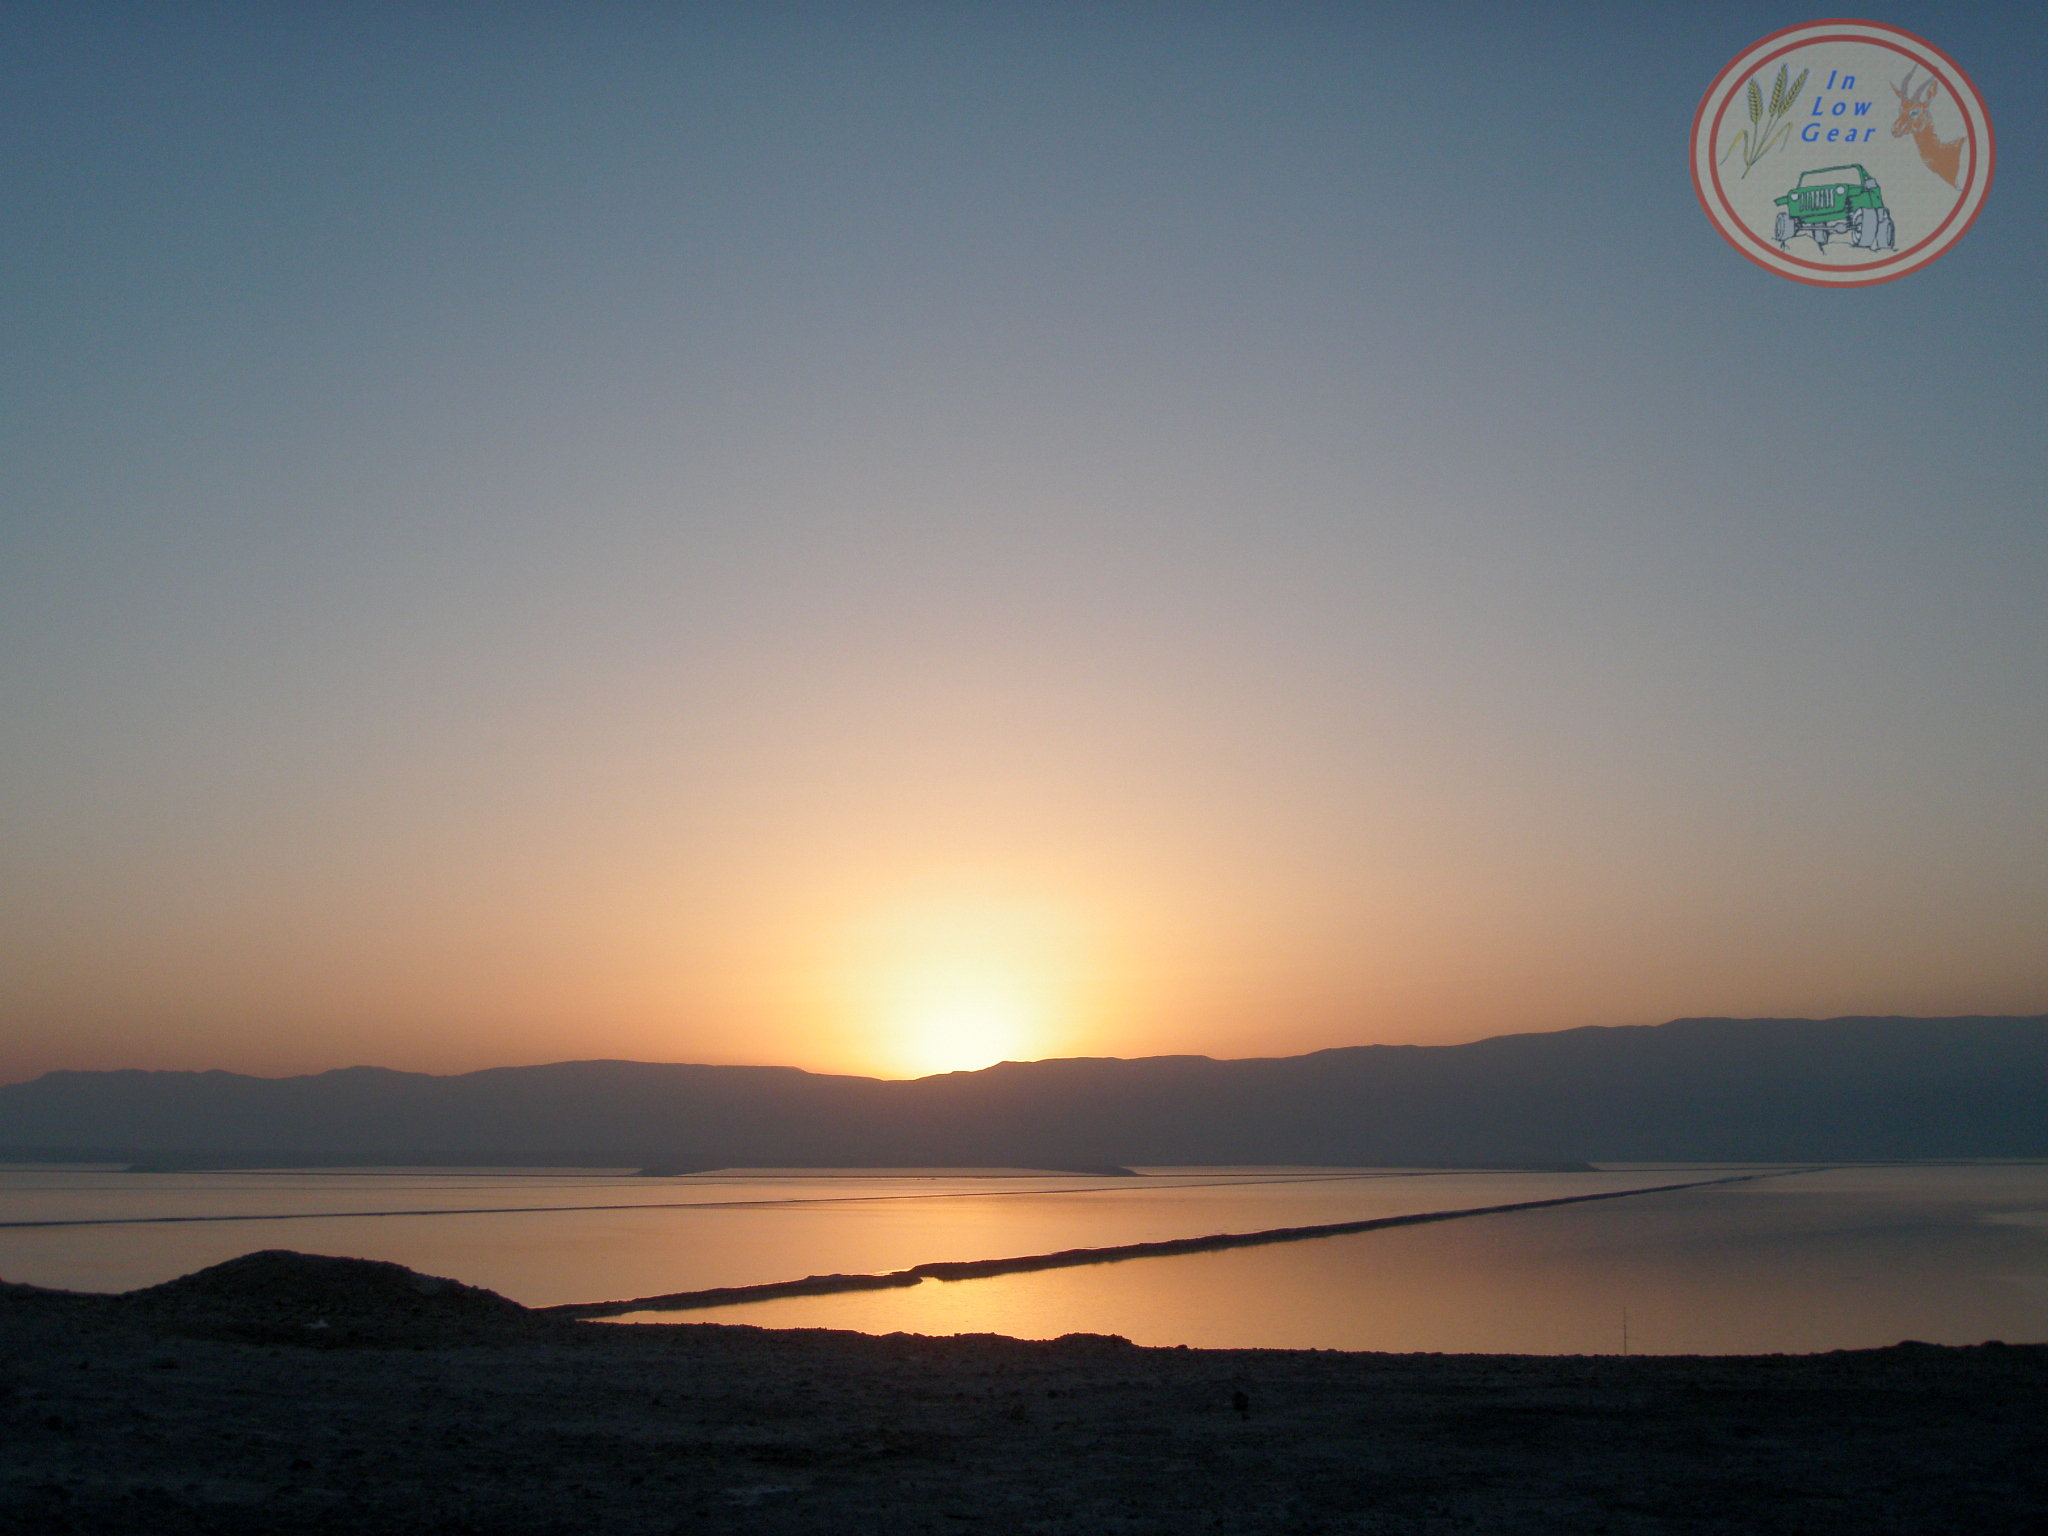 Sdom Dead Sea evaporation "ponds" jeep tours.